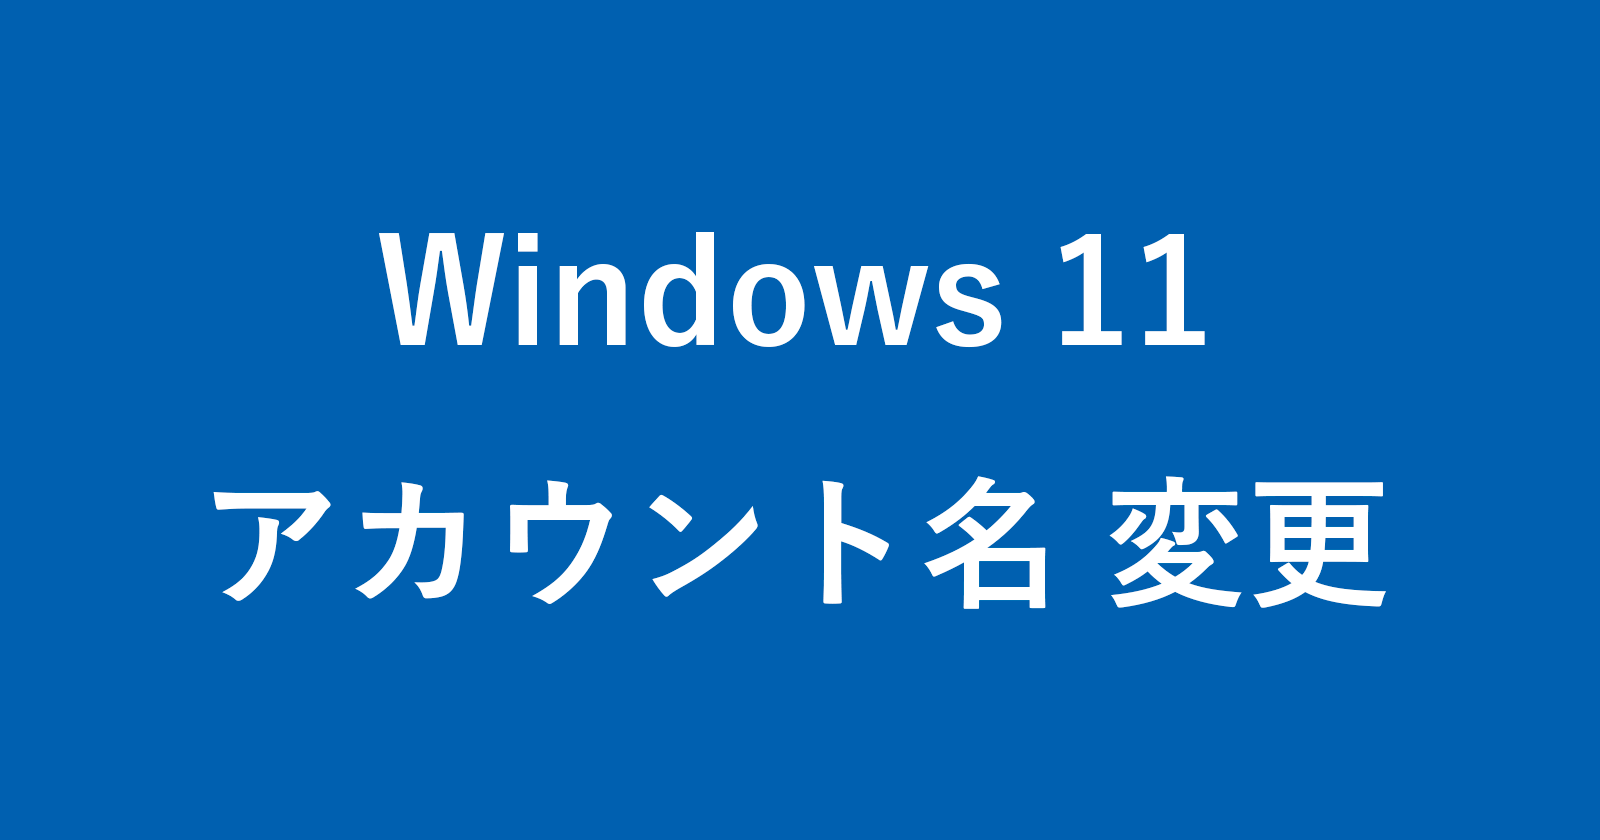 windows 11 account name